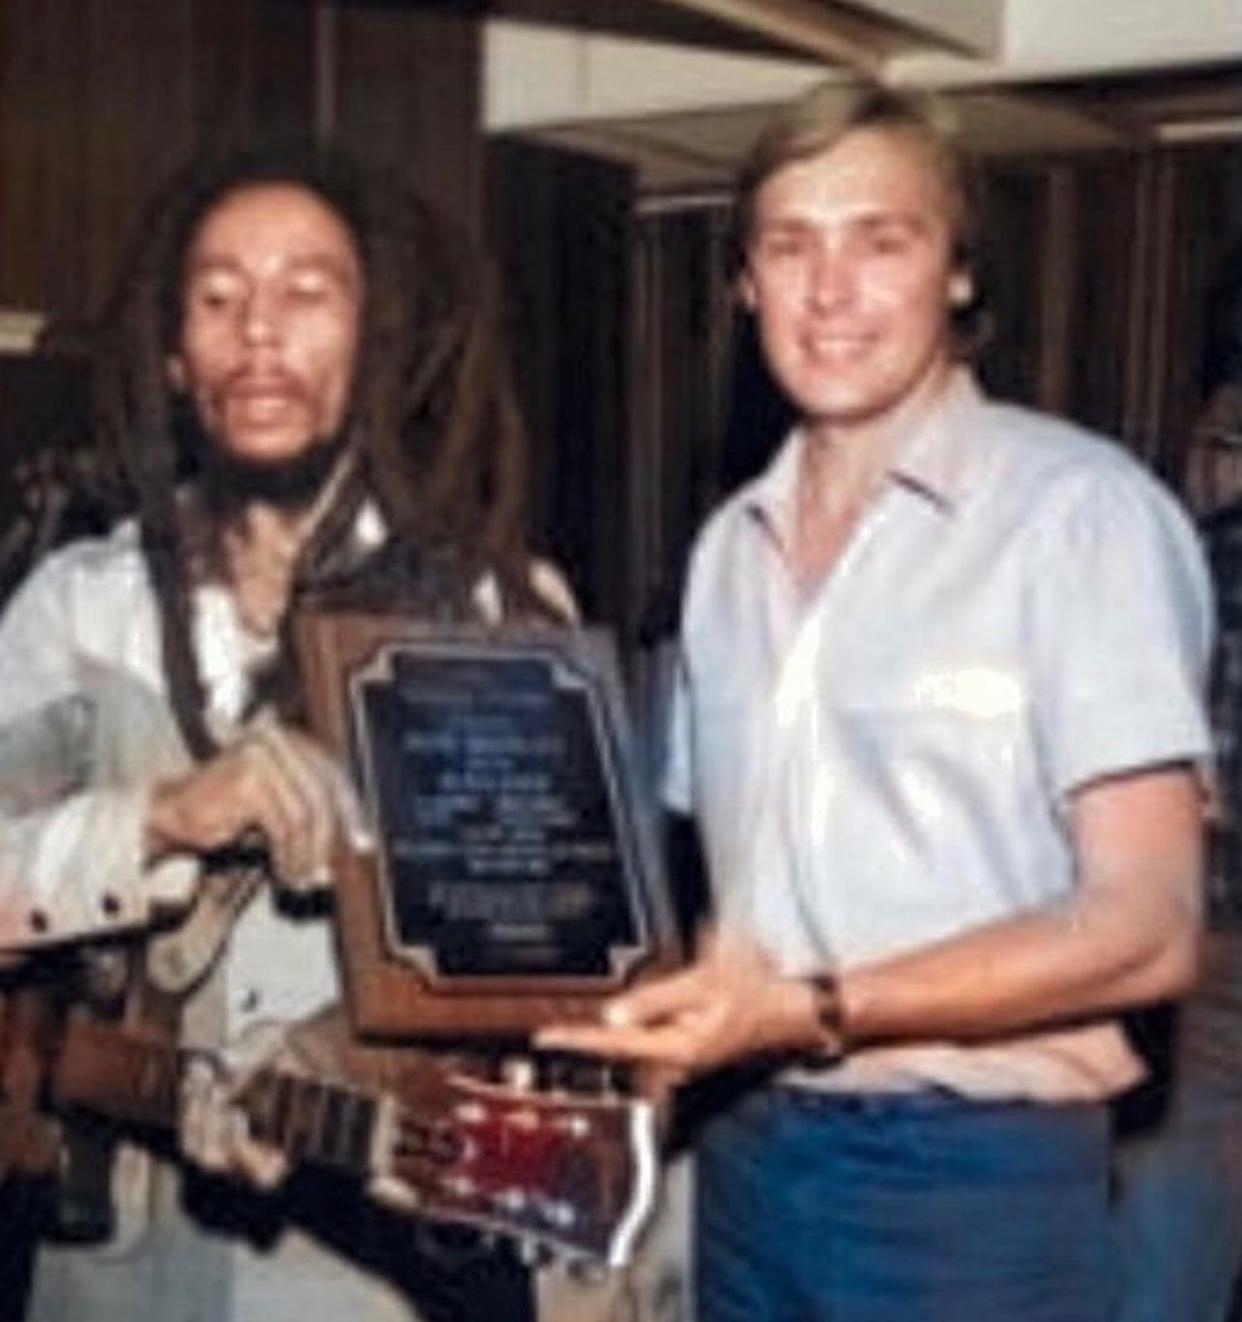 Bob Marley backstage with Rich Engler.